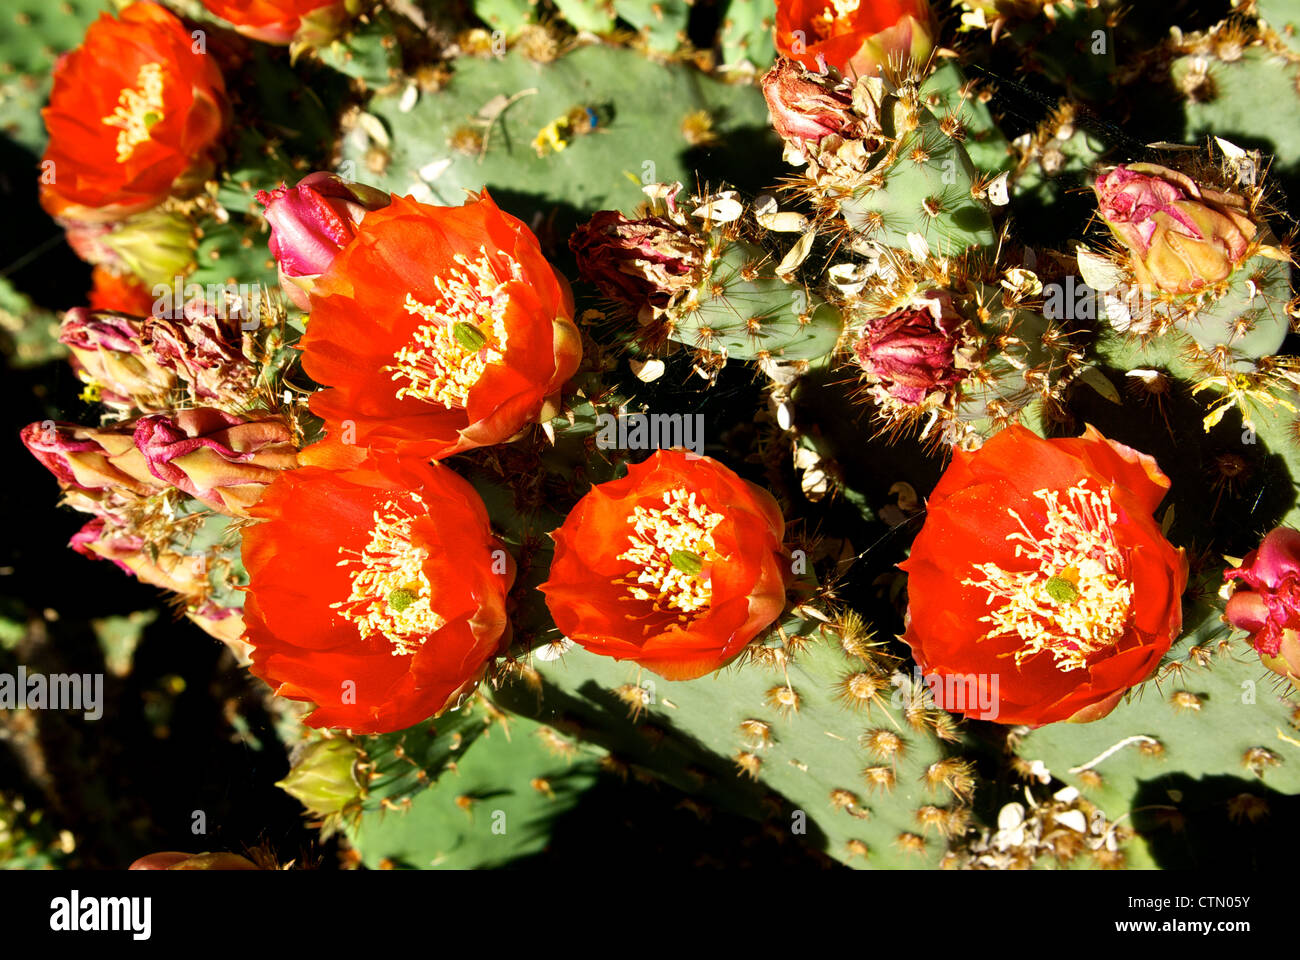 Prickly pear cactus in bloom Sonoran Desert vegetation Stock Photo